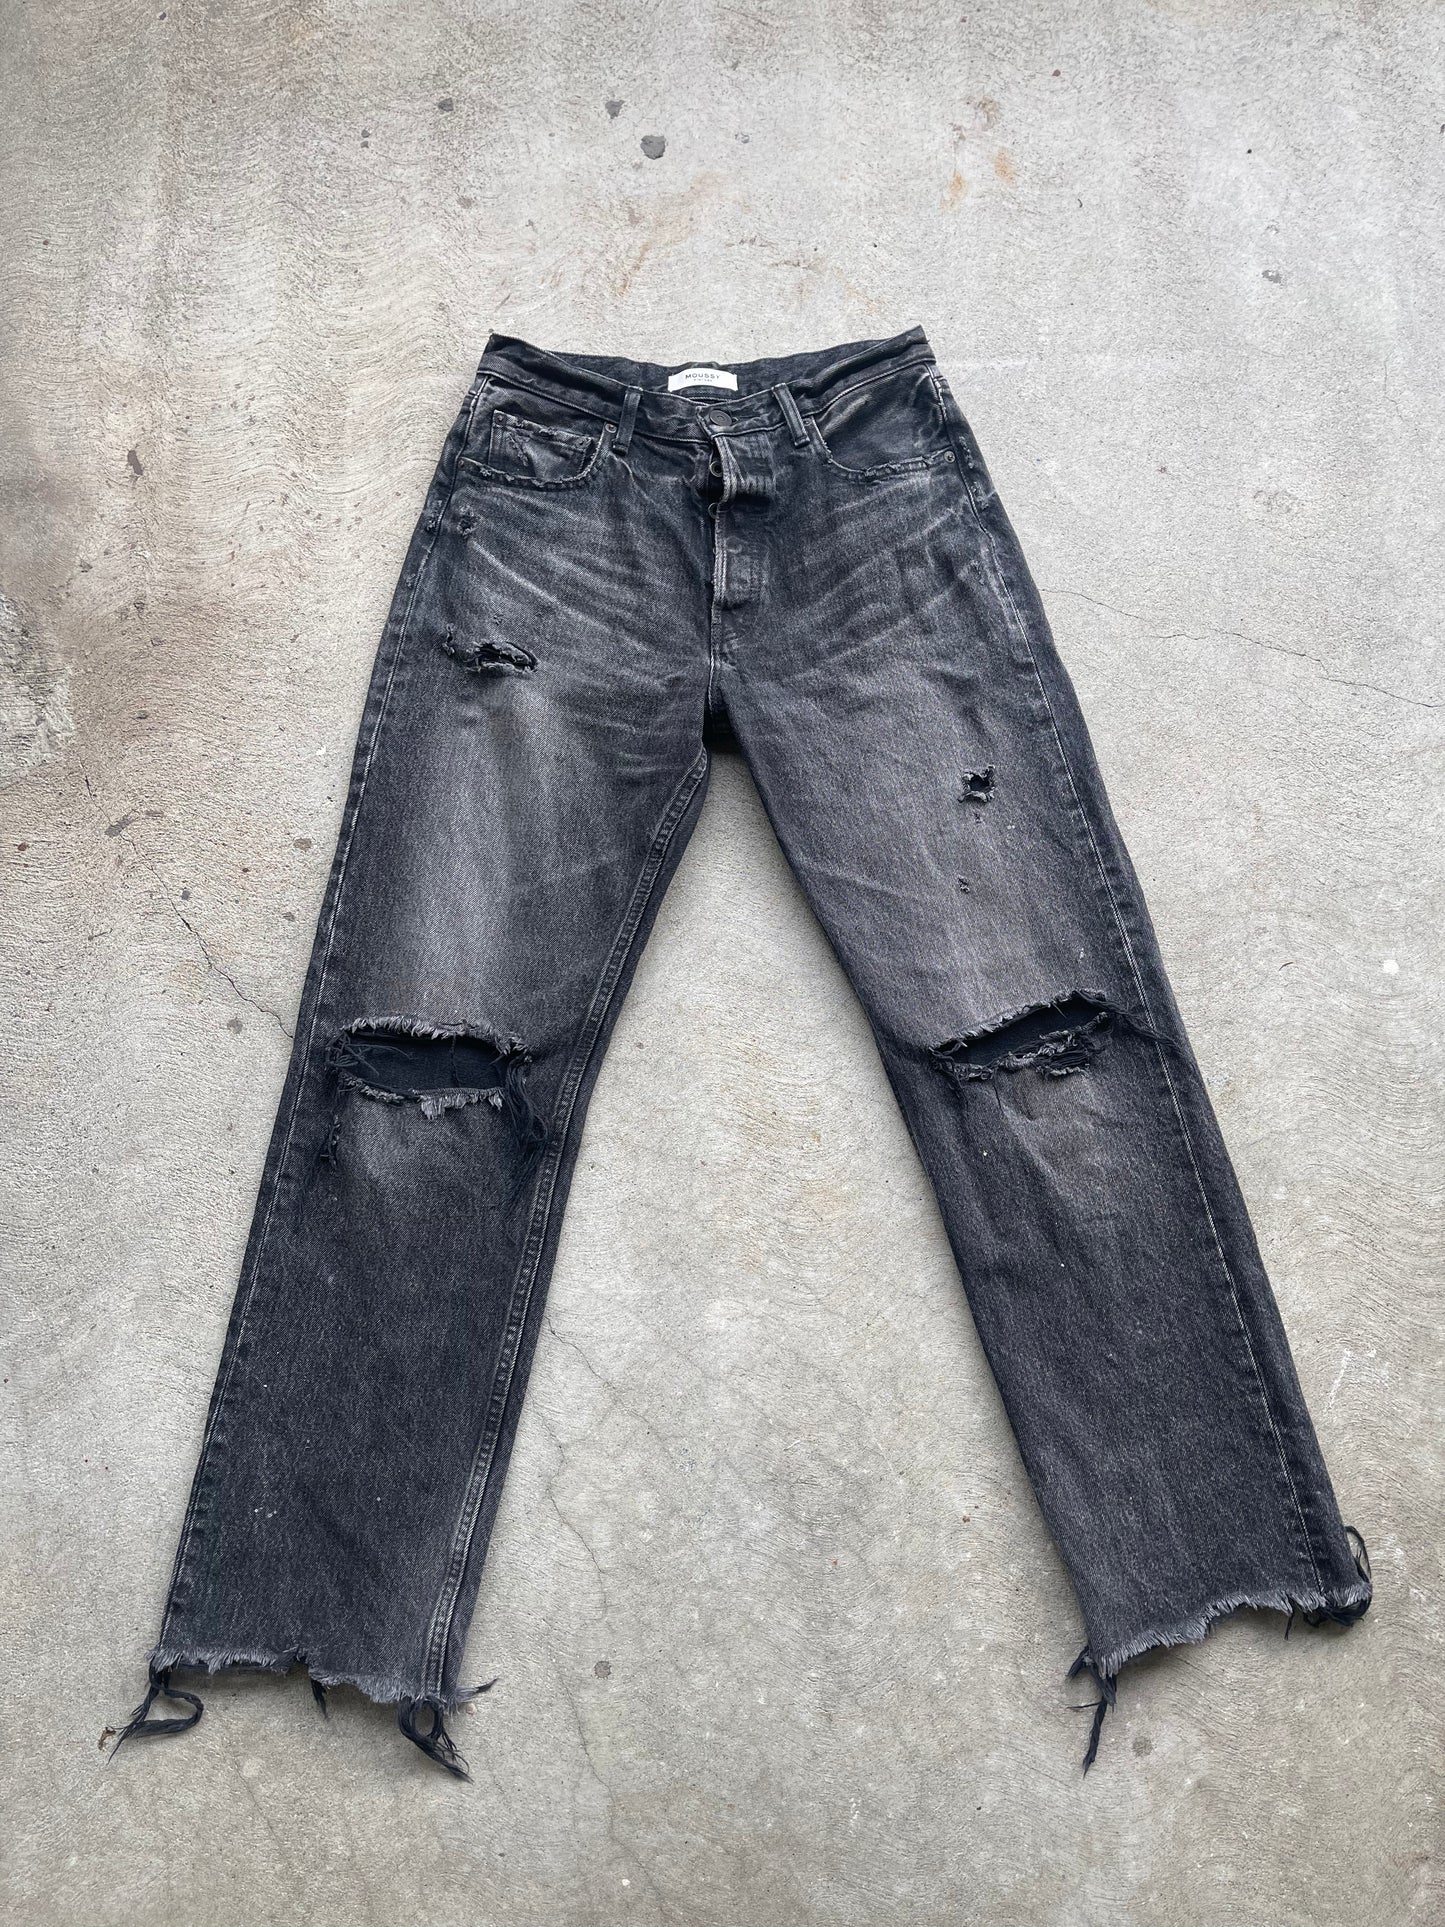 Preloved MOUSSY VINTAGE Jeans - size 28